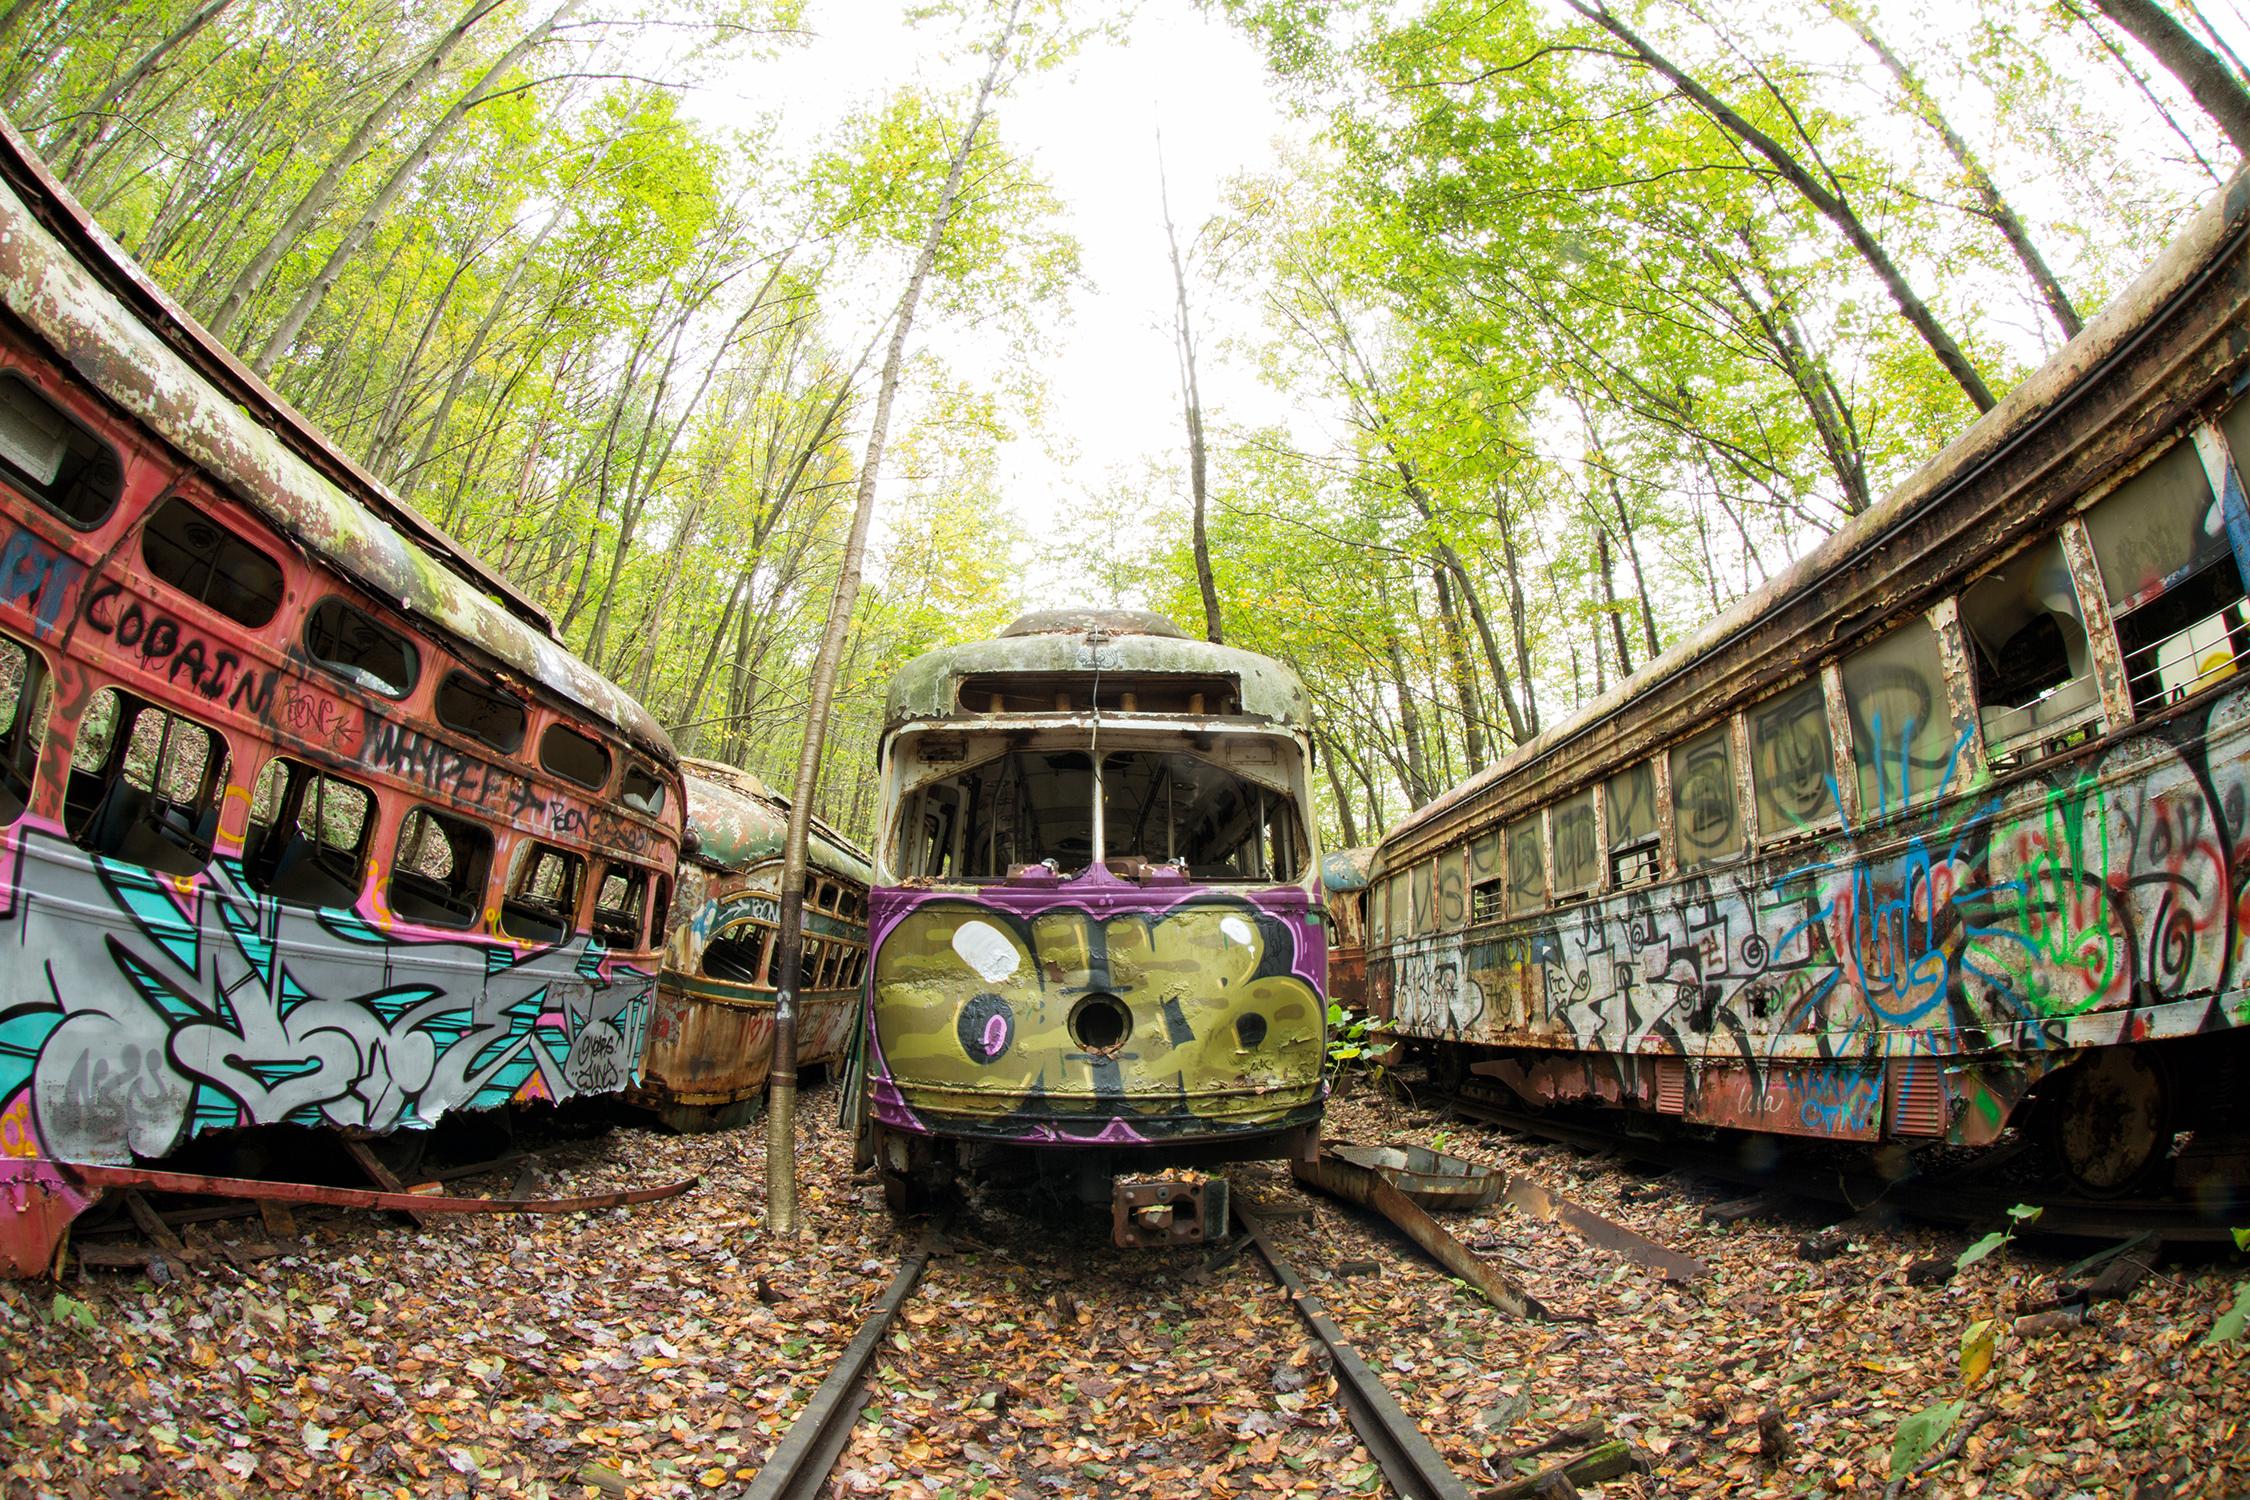 "Graffiti Yard", abandoned, trolley, landscape, rusty, train, color photograph